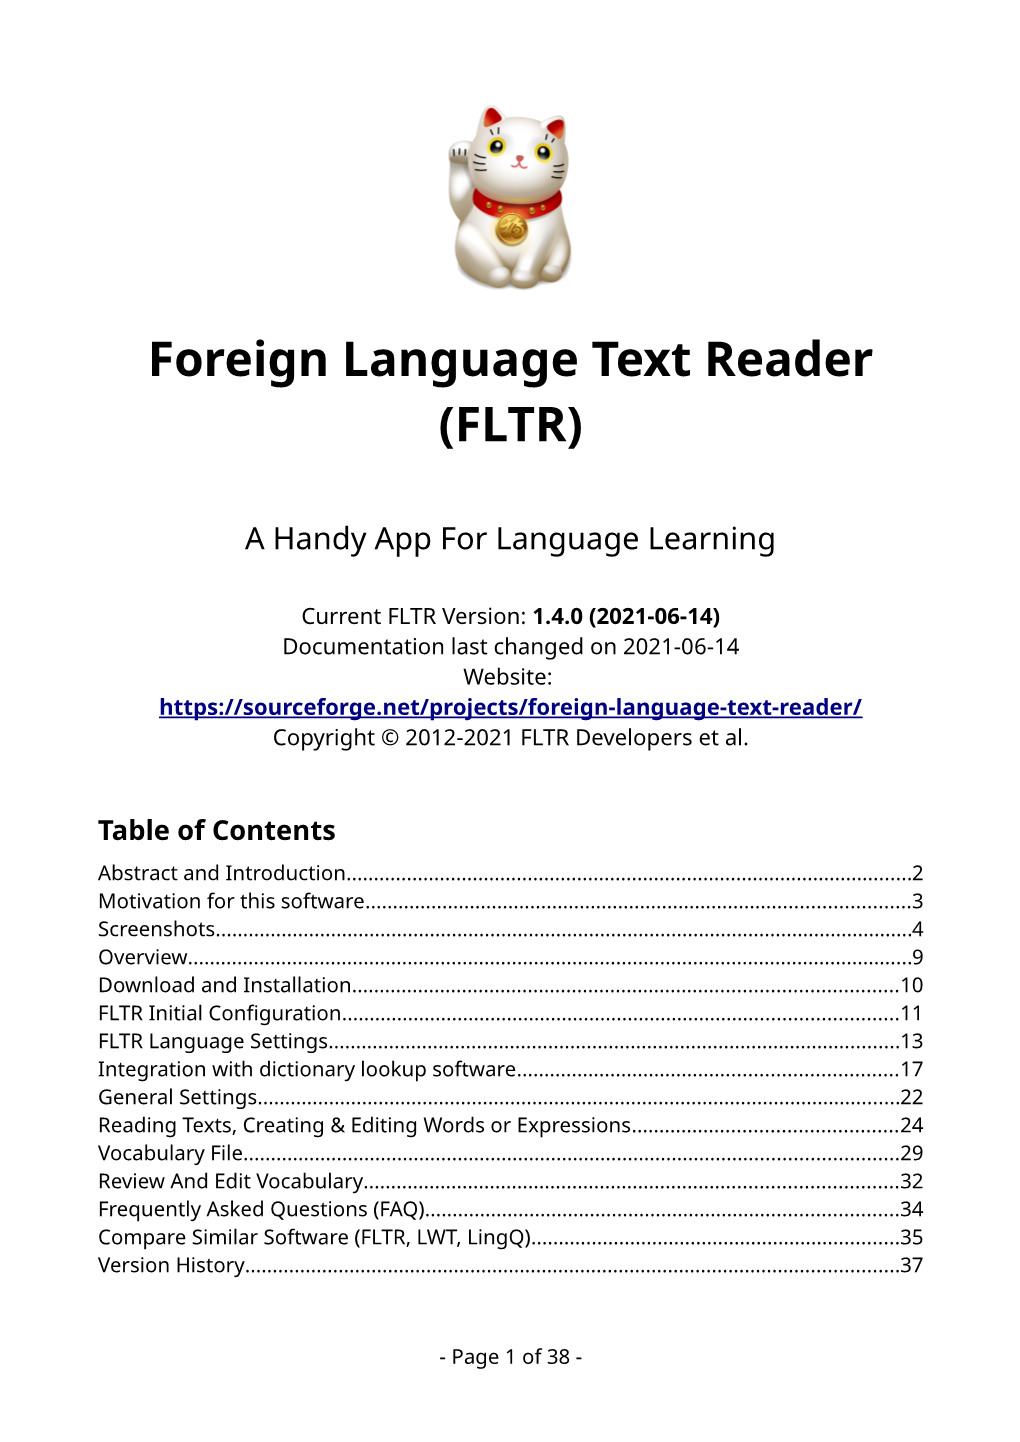 Foreign Language Text Reader (FLTR)